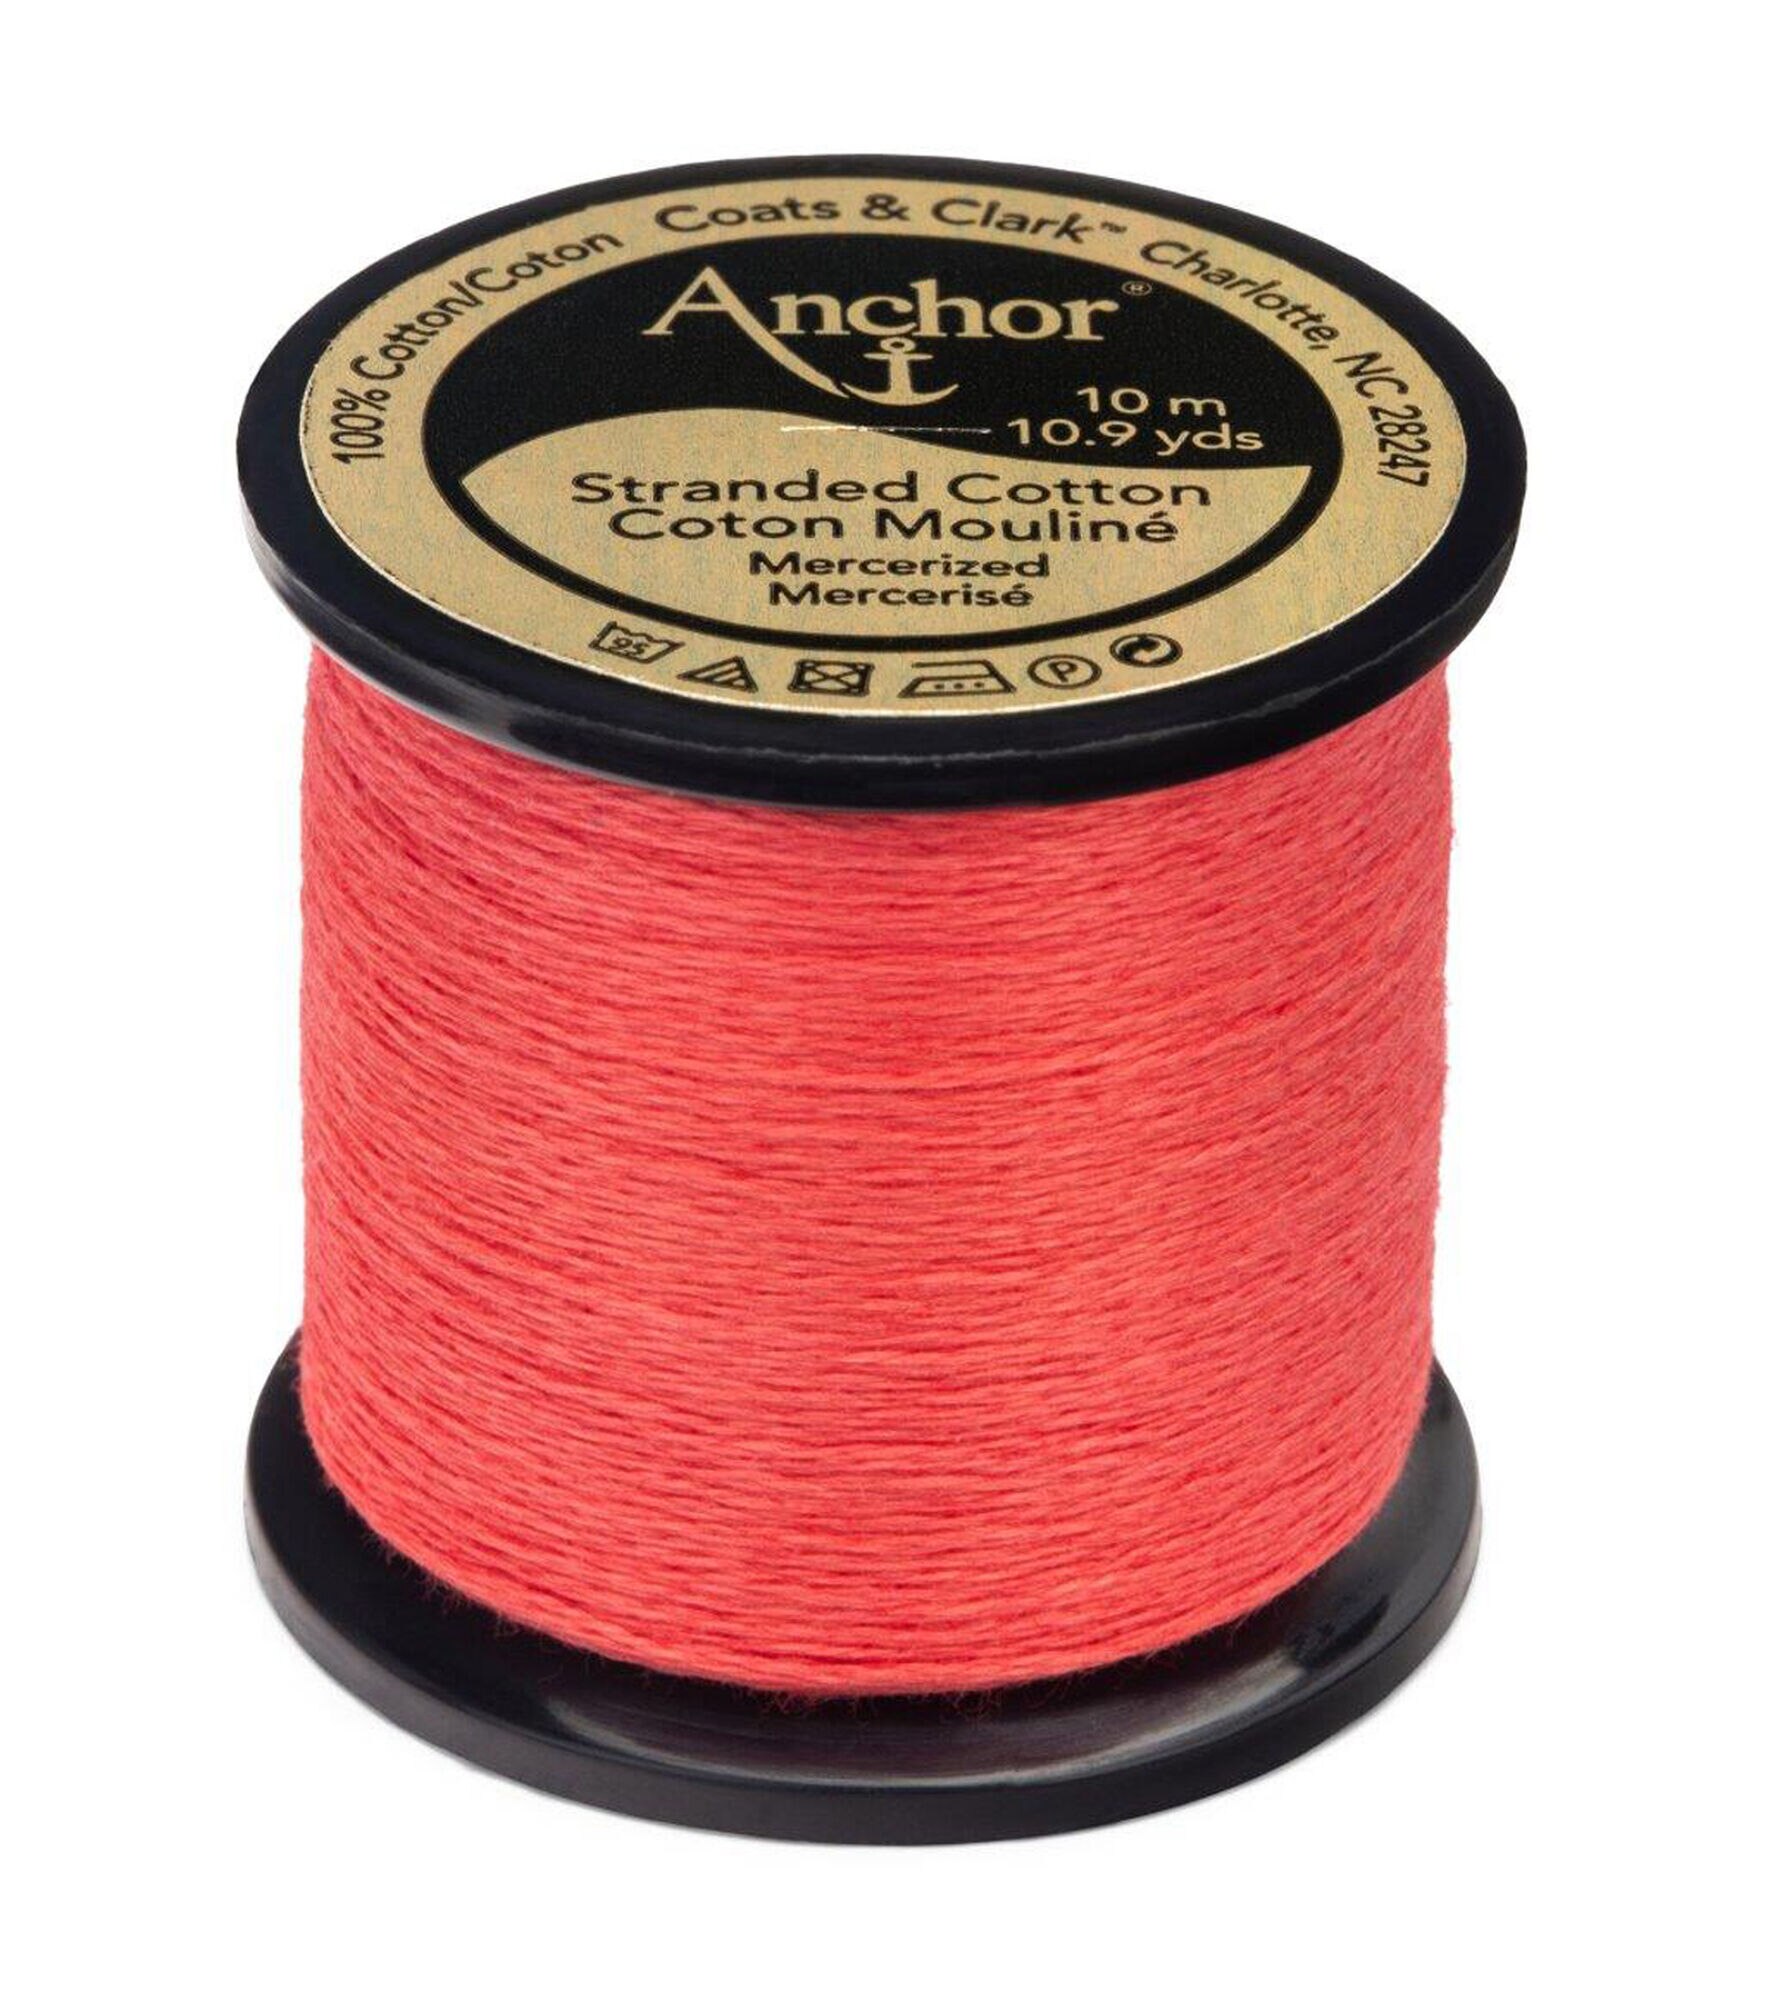 Anchor Cotton 10.9yd Pinks & Reds Cotton Embroidery Floss, 11 Salmon Medium Dark, hi-res